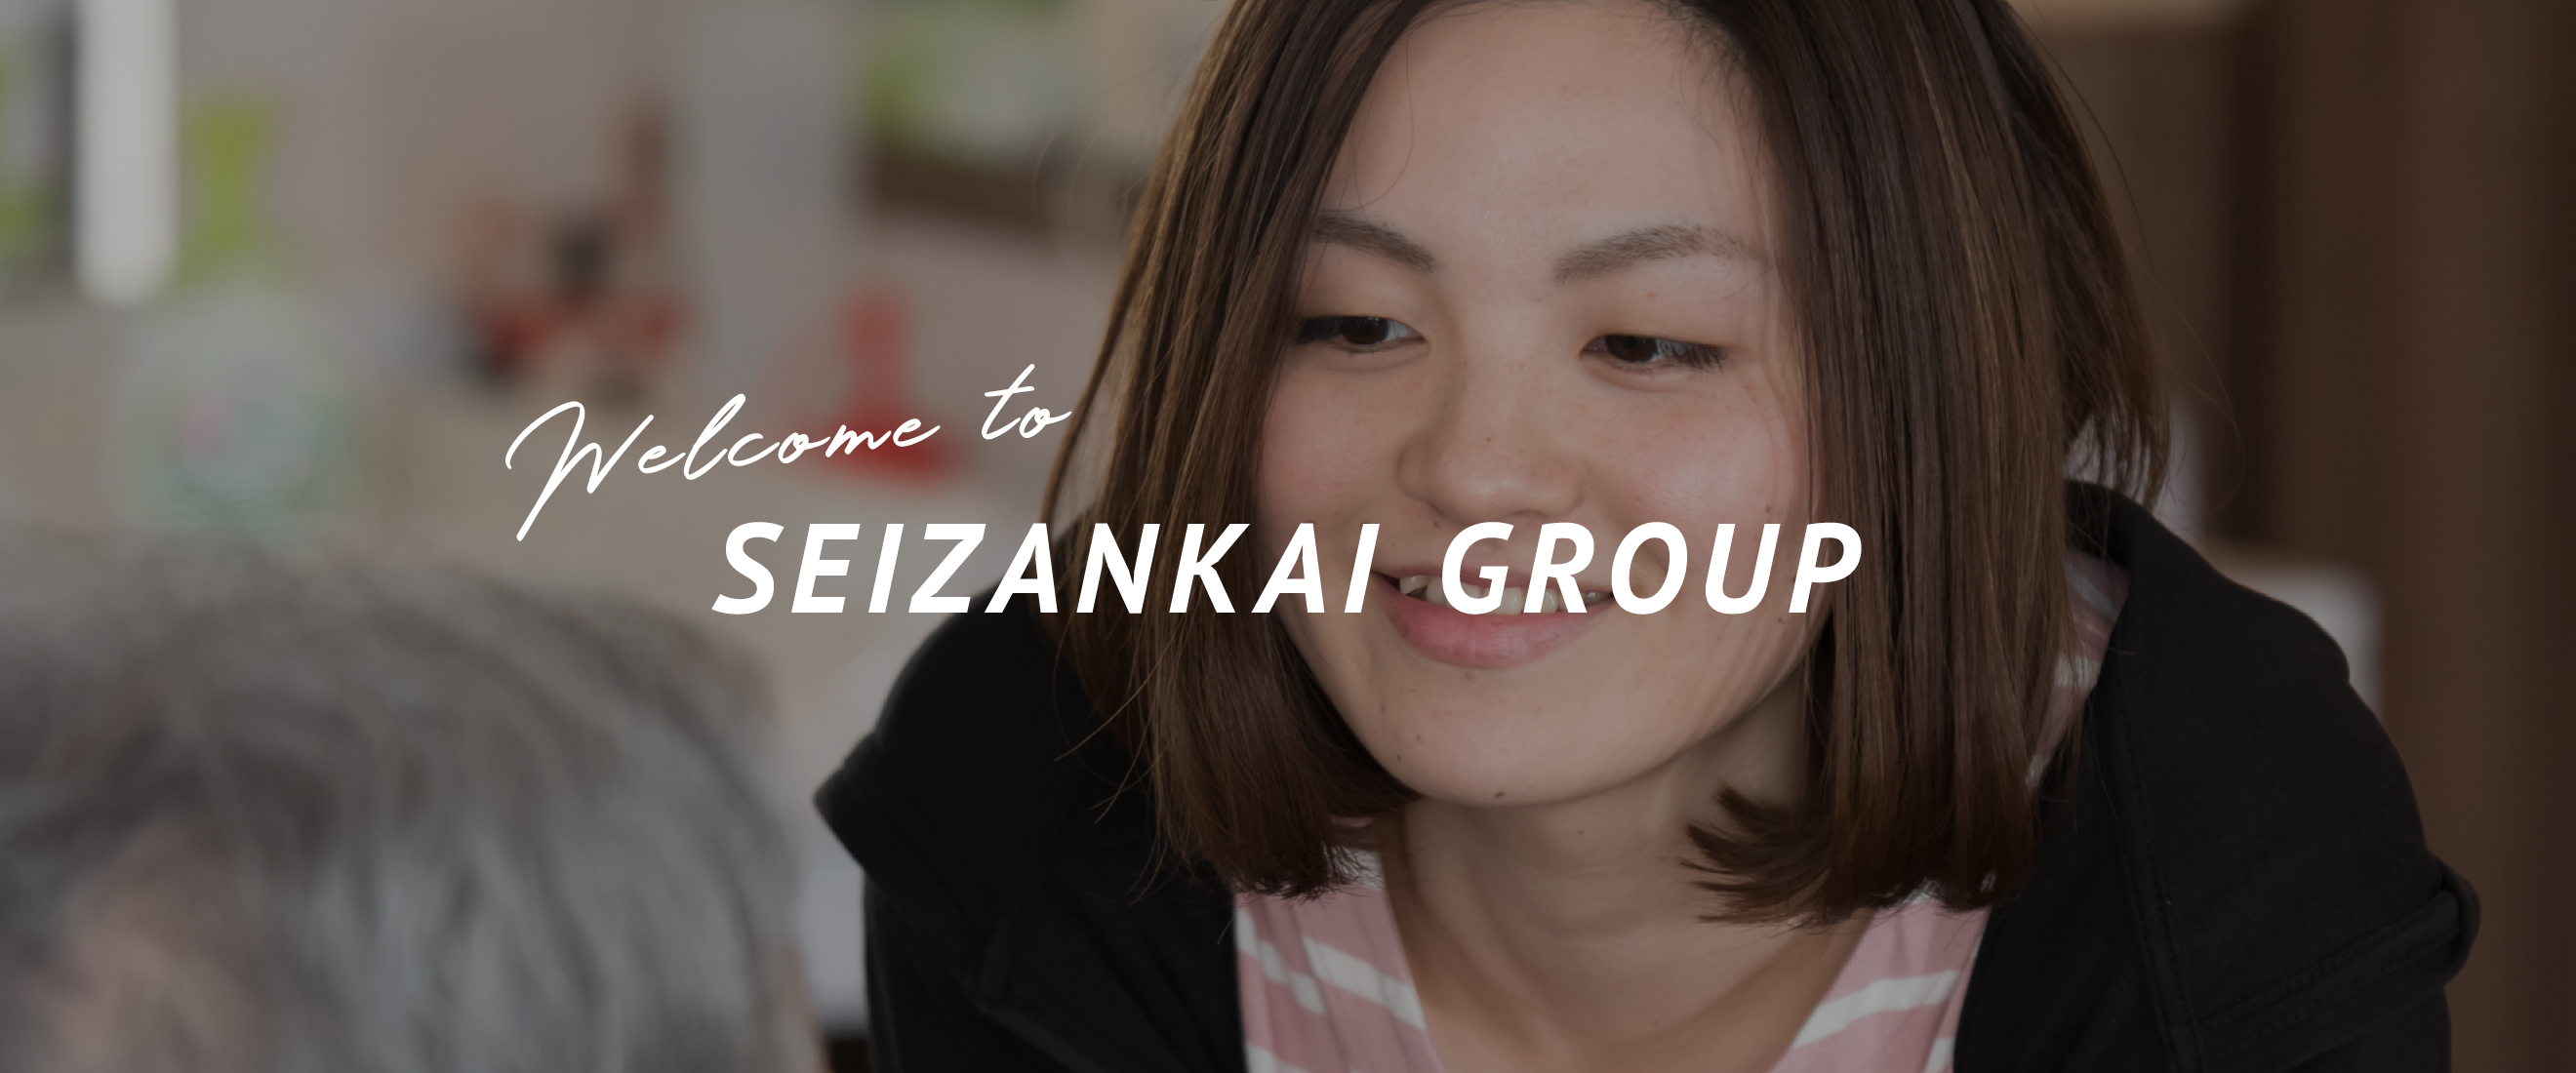 welcome to seizankai group